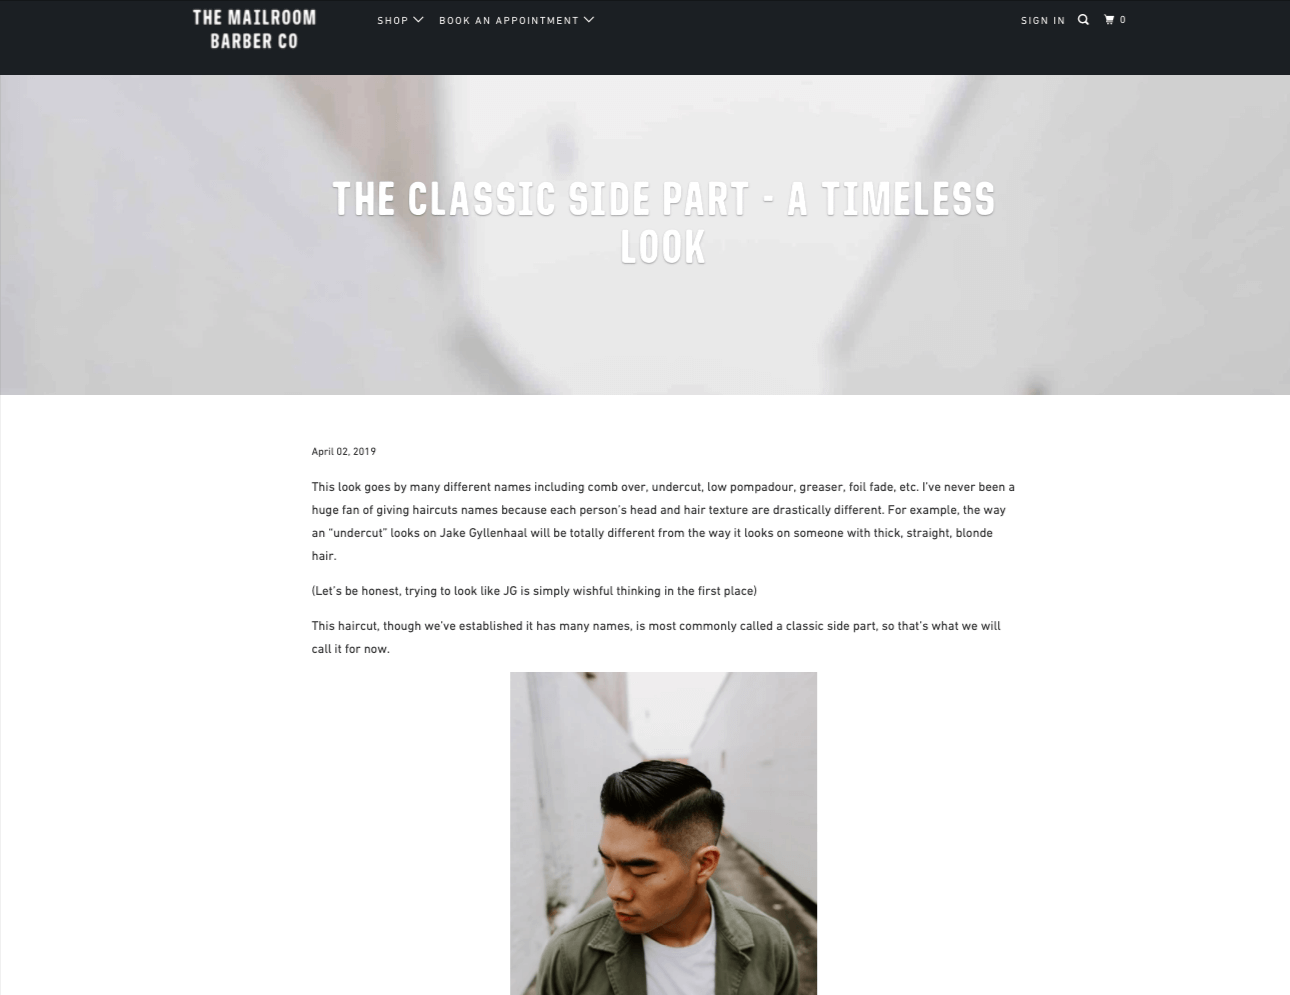 Article post on barber blog